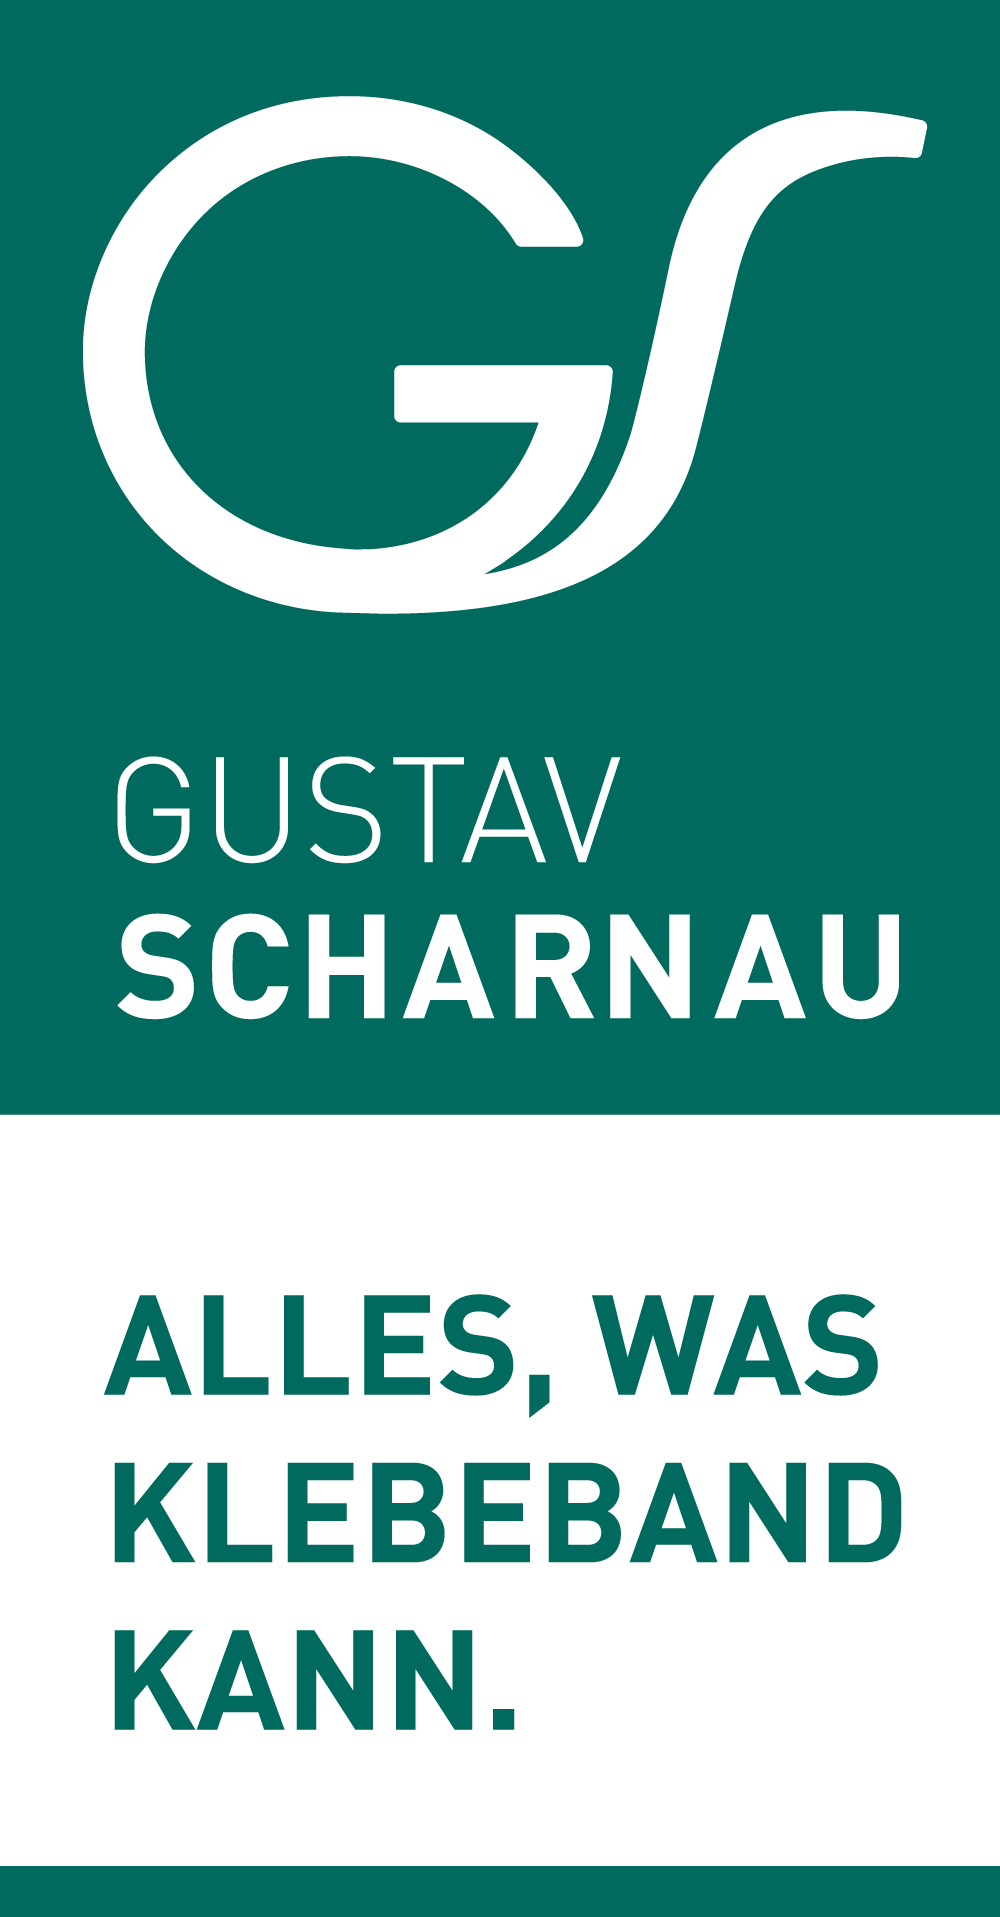 Partner: Gustav Scharnau Logo